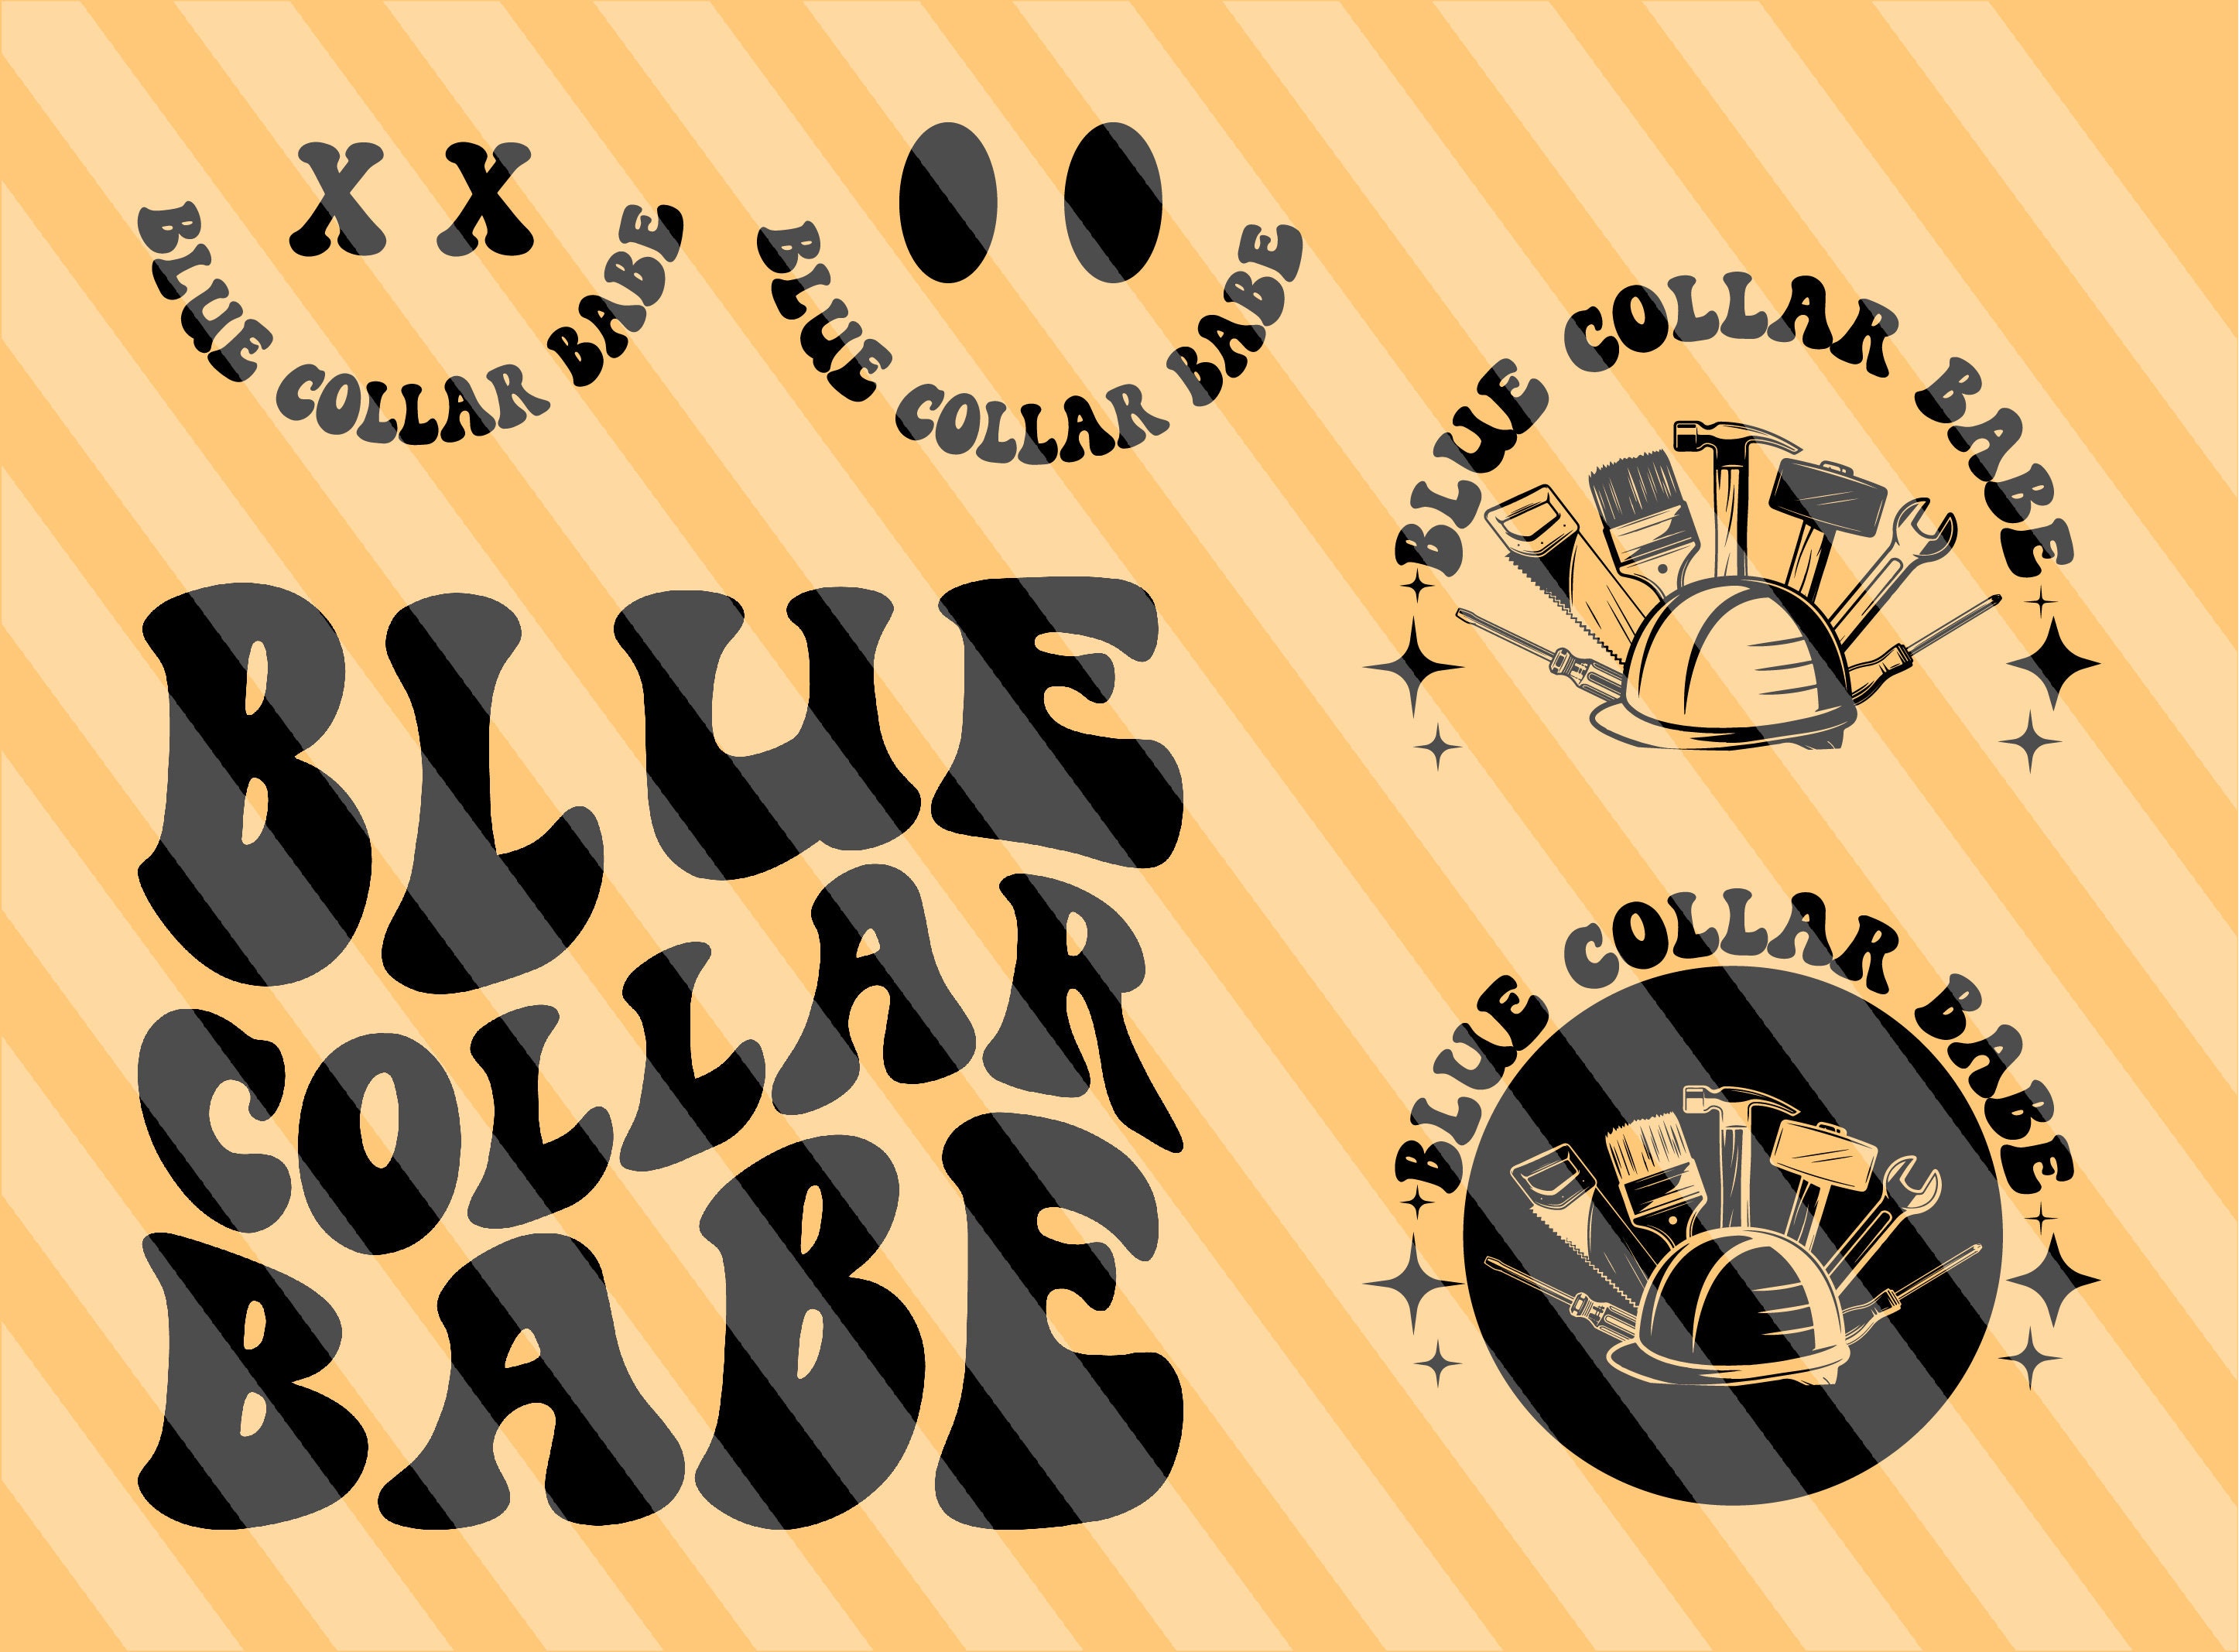 Velcro Patch — Blue Collar Dollar